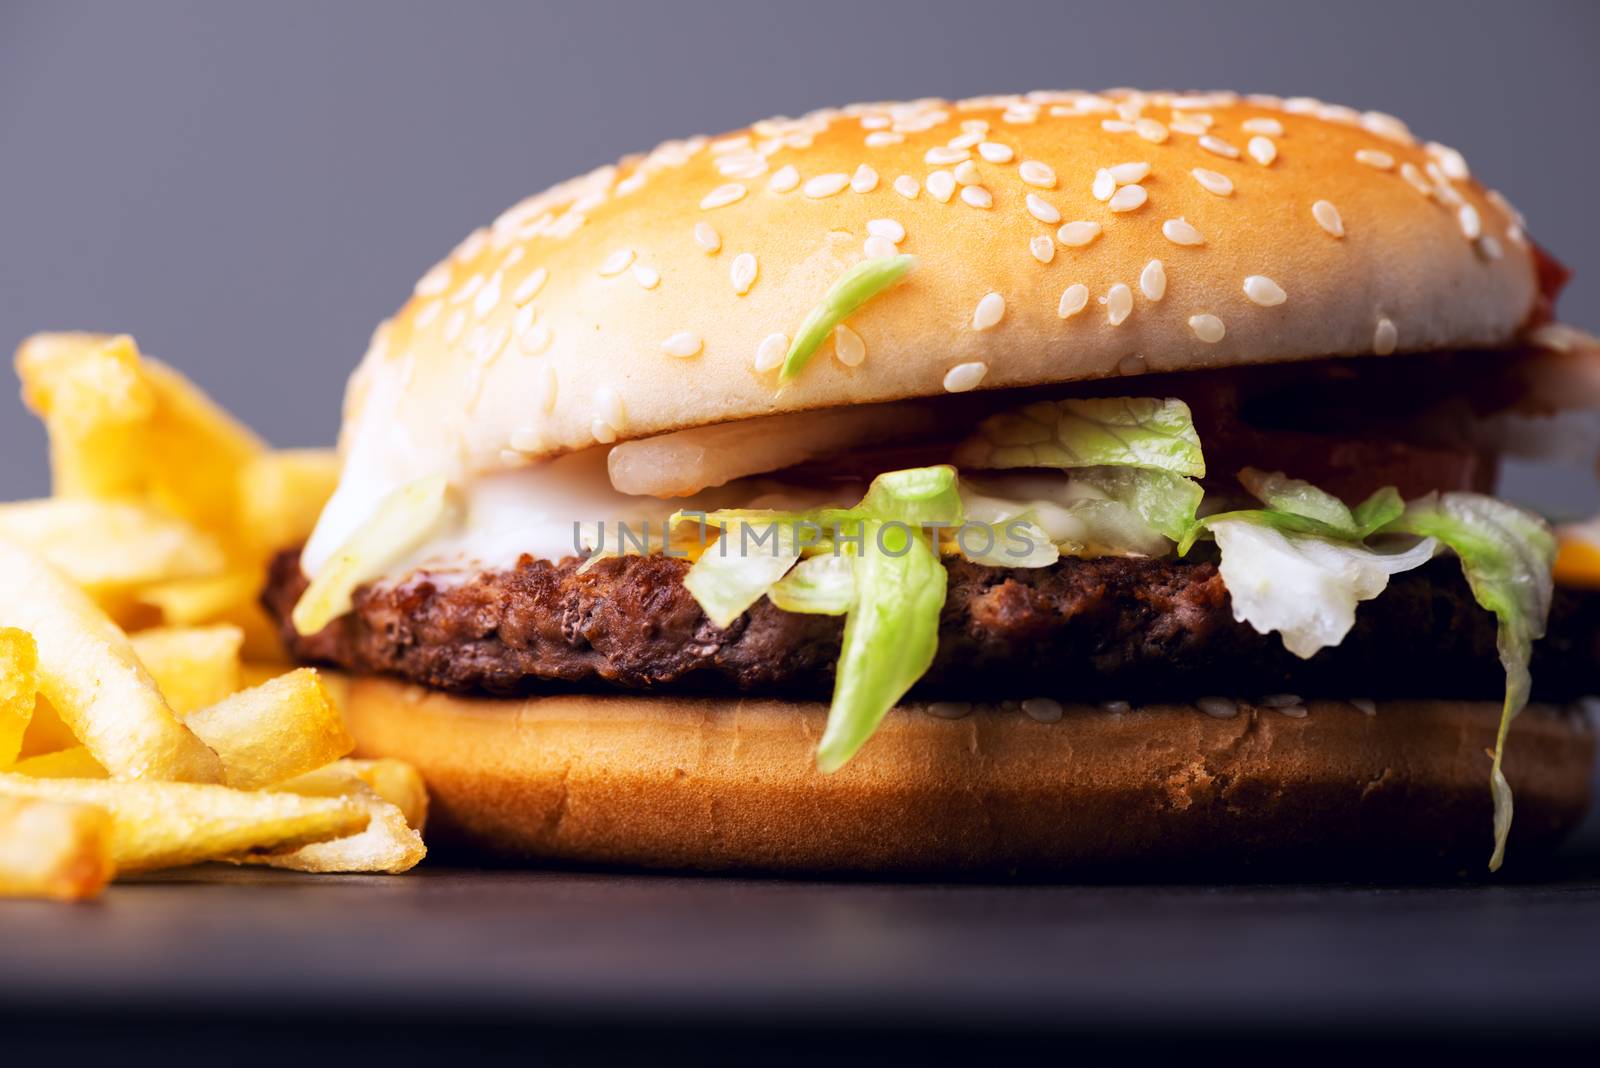 Popular fastfood: soft hamburger with fresh meat